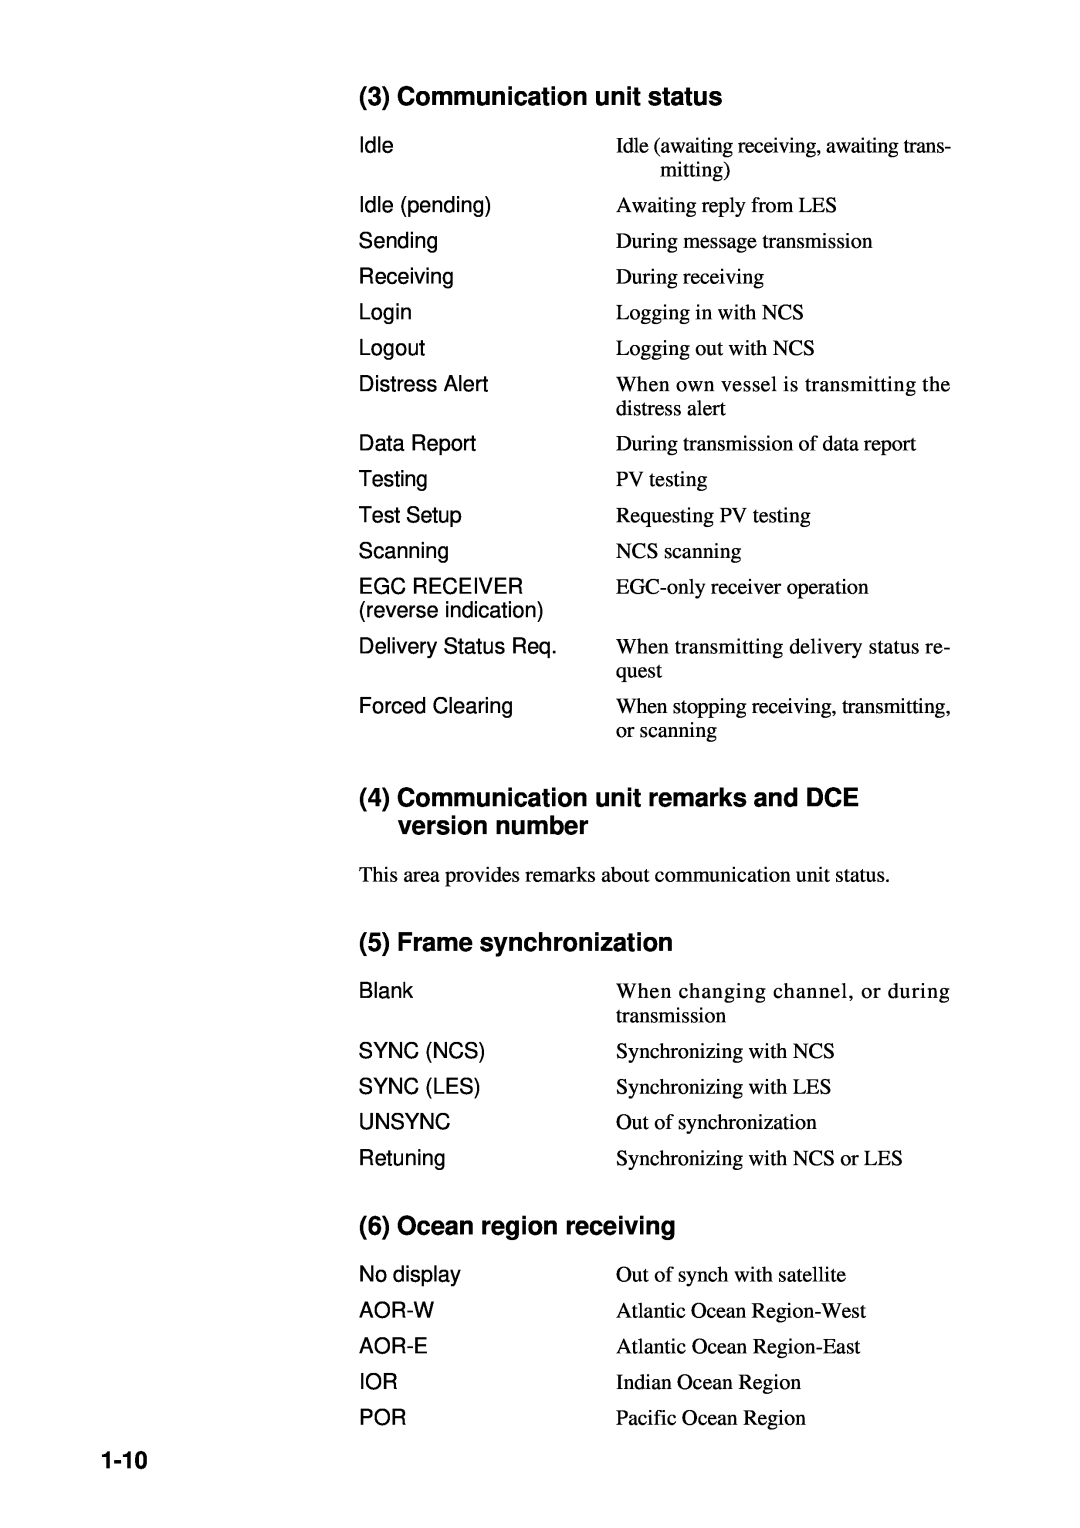 Furuno RC-1500-1T Communication unit status, Communication unit remarks and DCE version number, Frame synchronization 